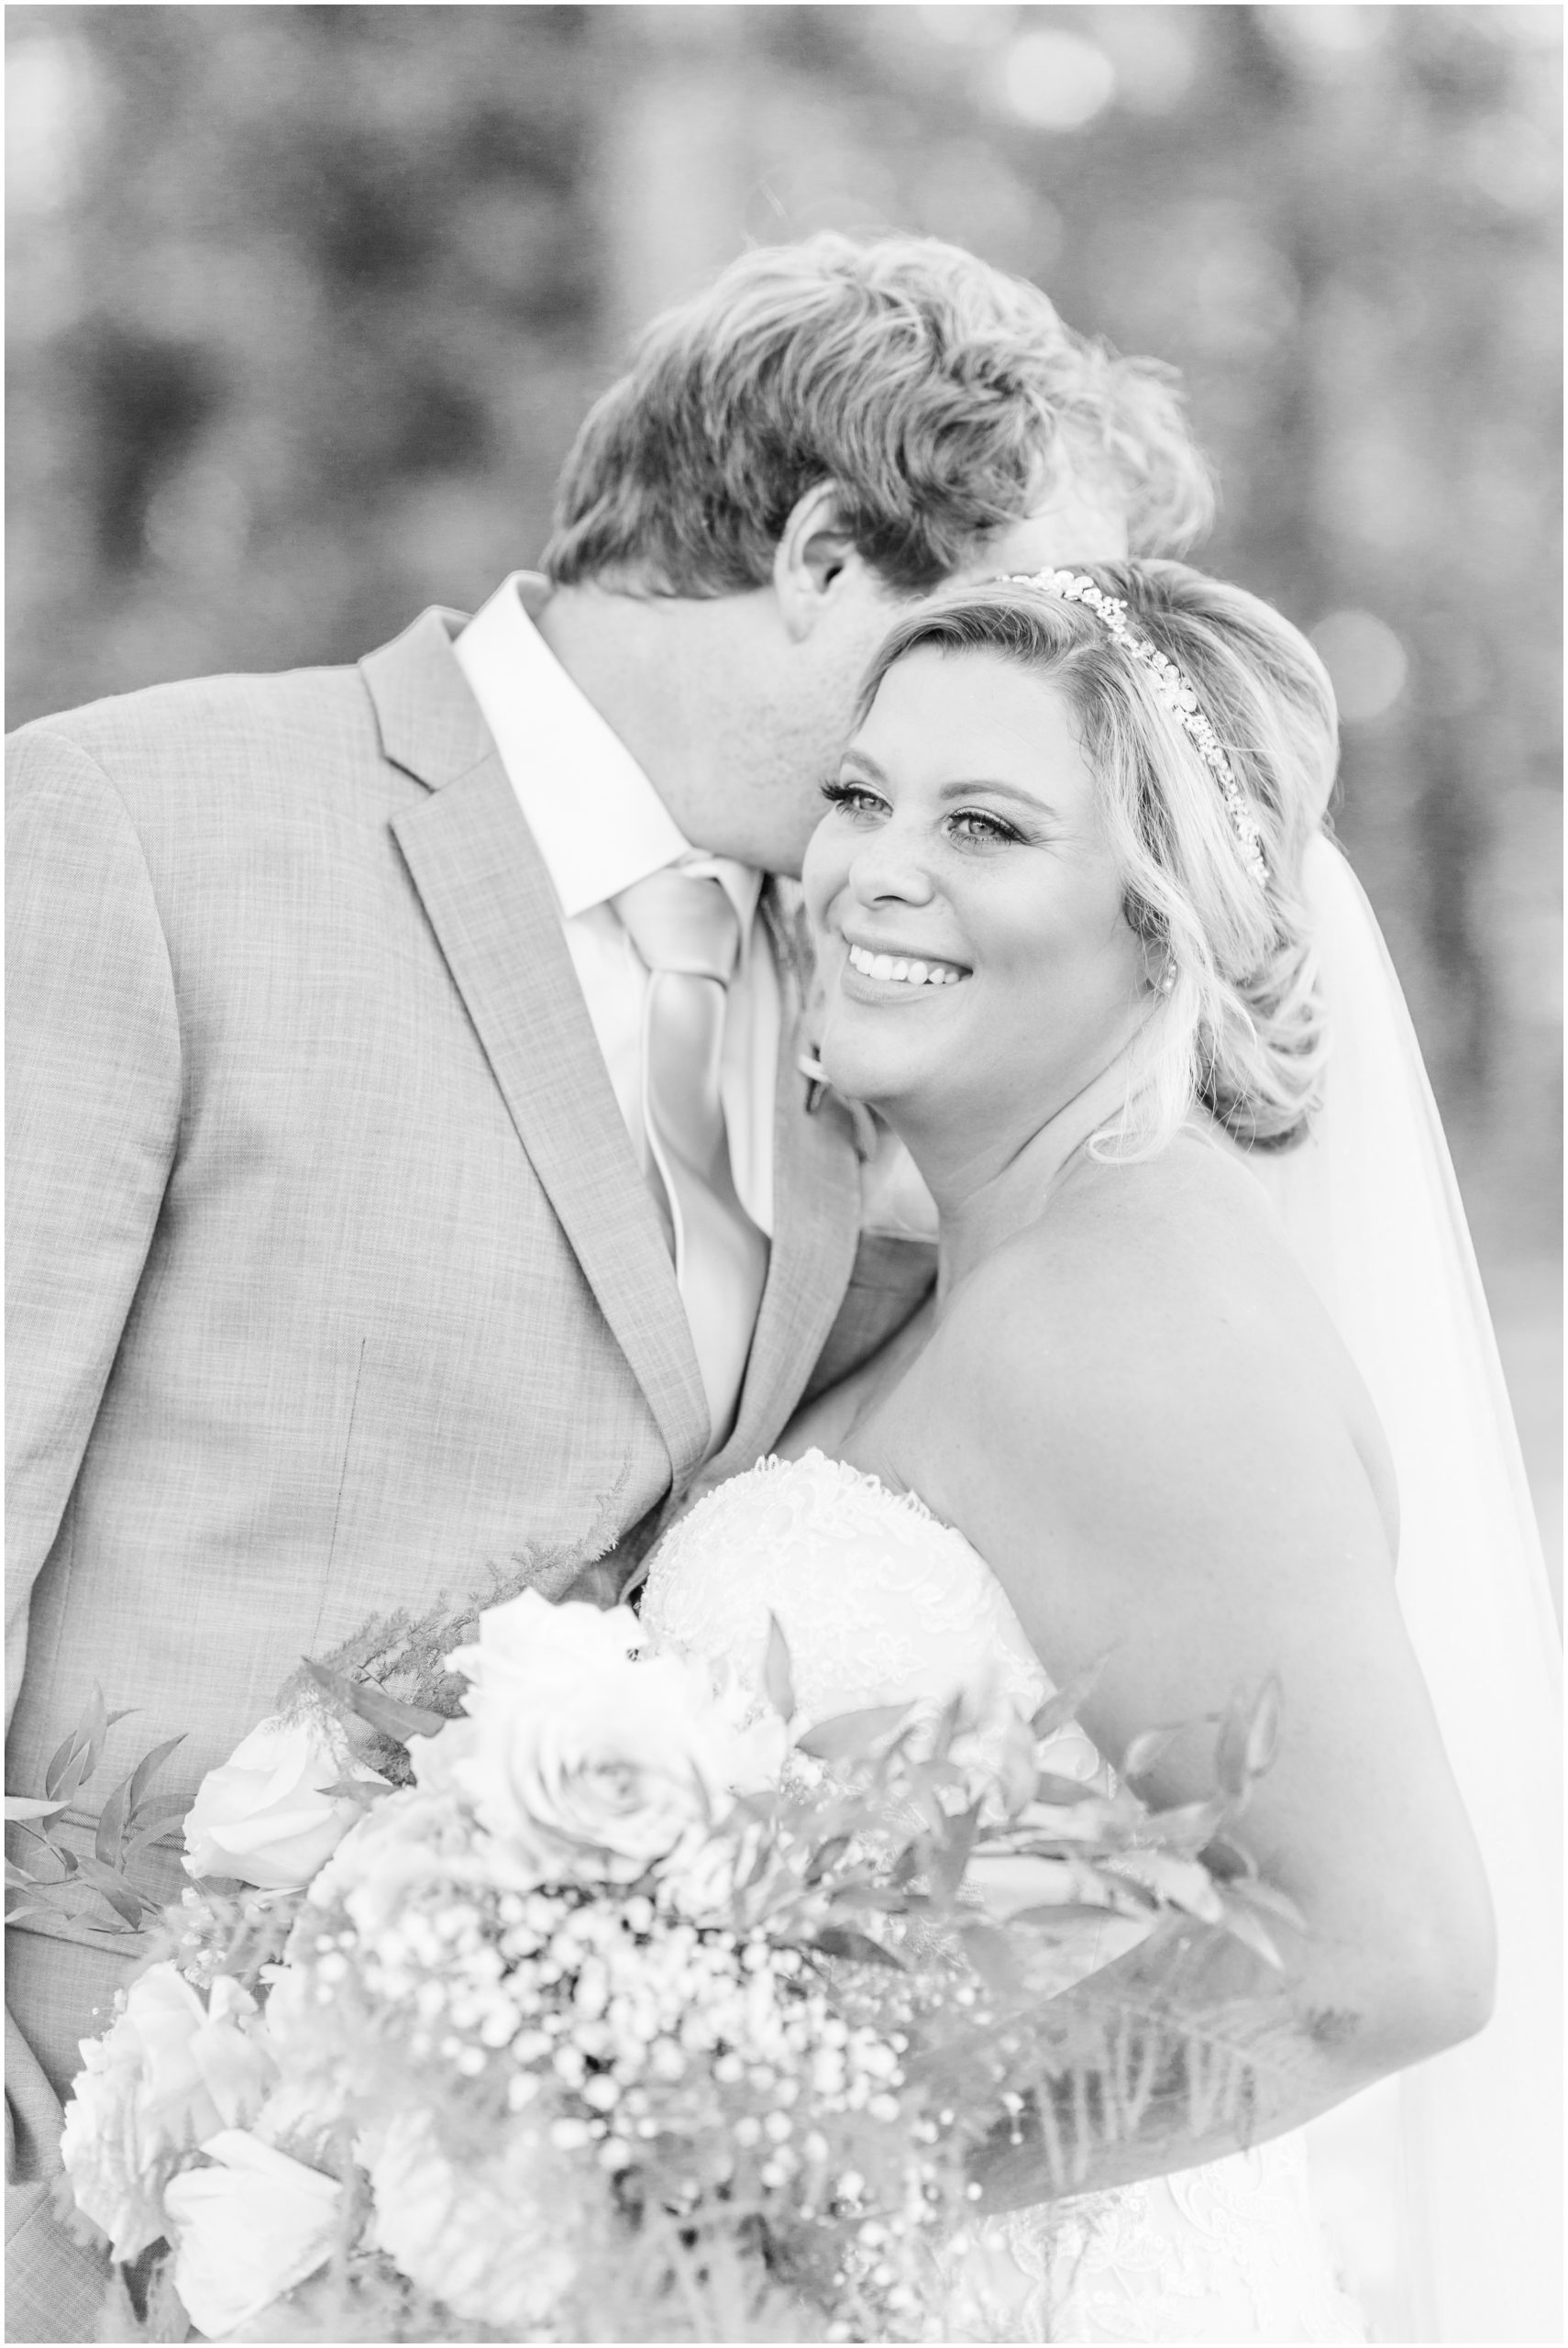 https://alyssa-rachelle.com/wp-content/uploads/sites/5743/2020/10/2020-06-Lindsey-Zac-Swartout-Wedding-at-Covey-Creek-with-Alyssa-Rachelle-Photography_0106-scaled.jpg